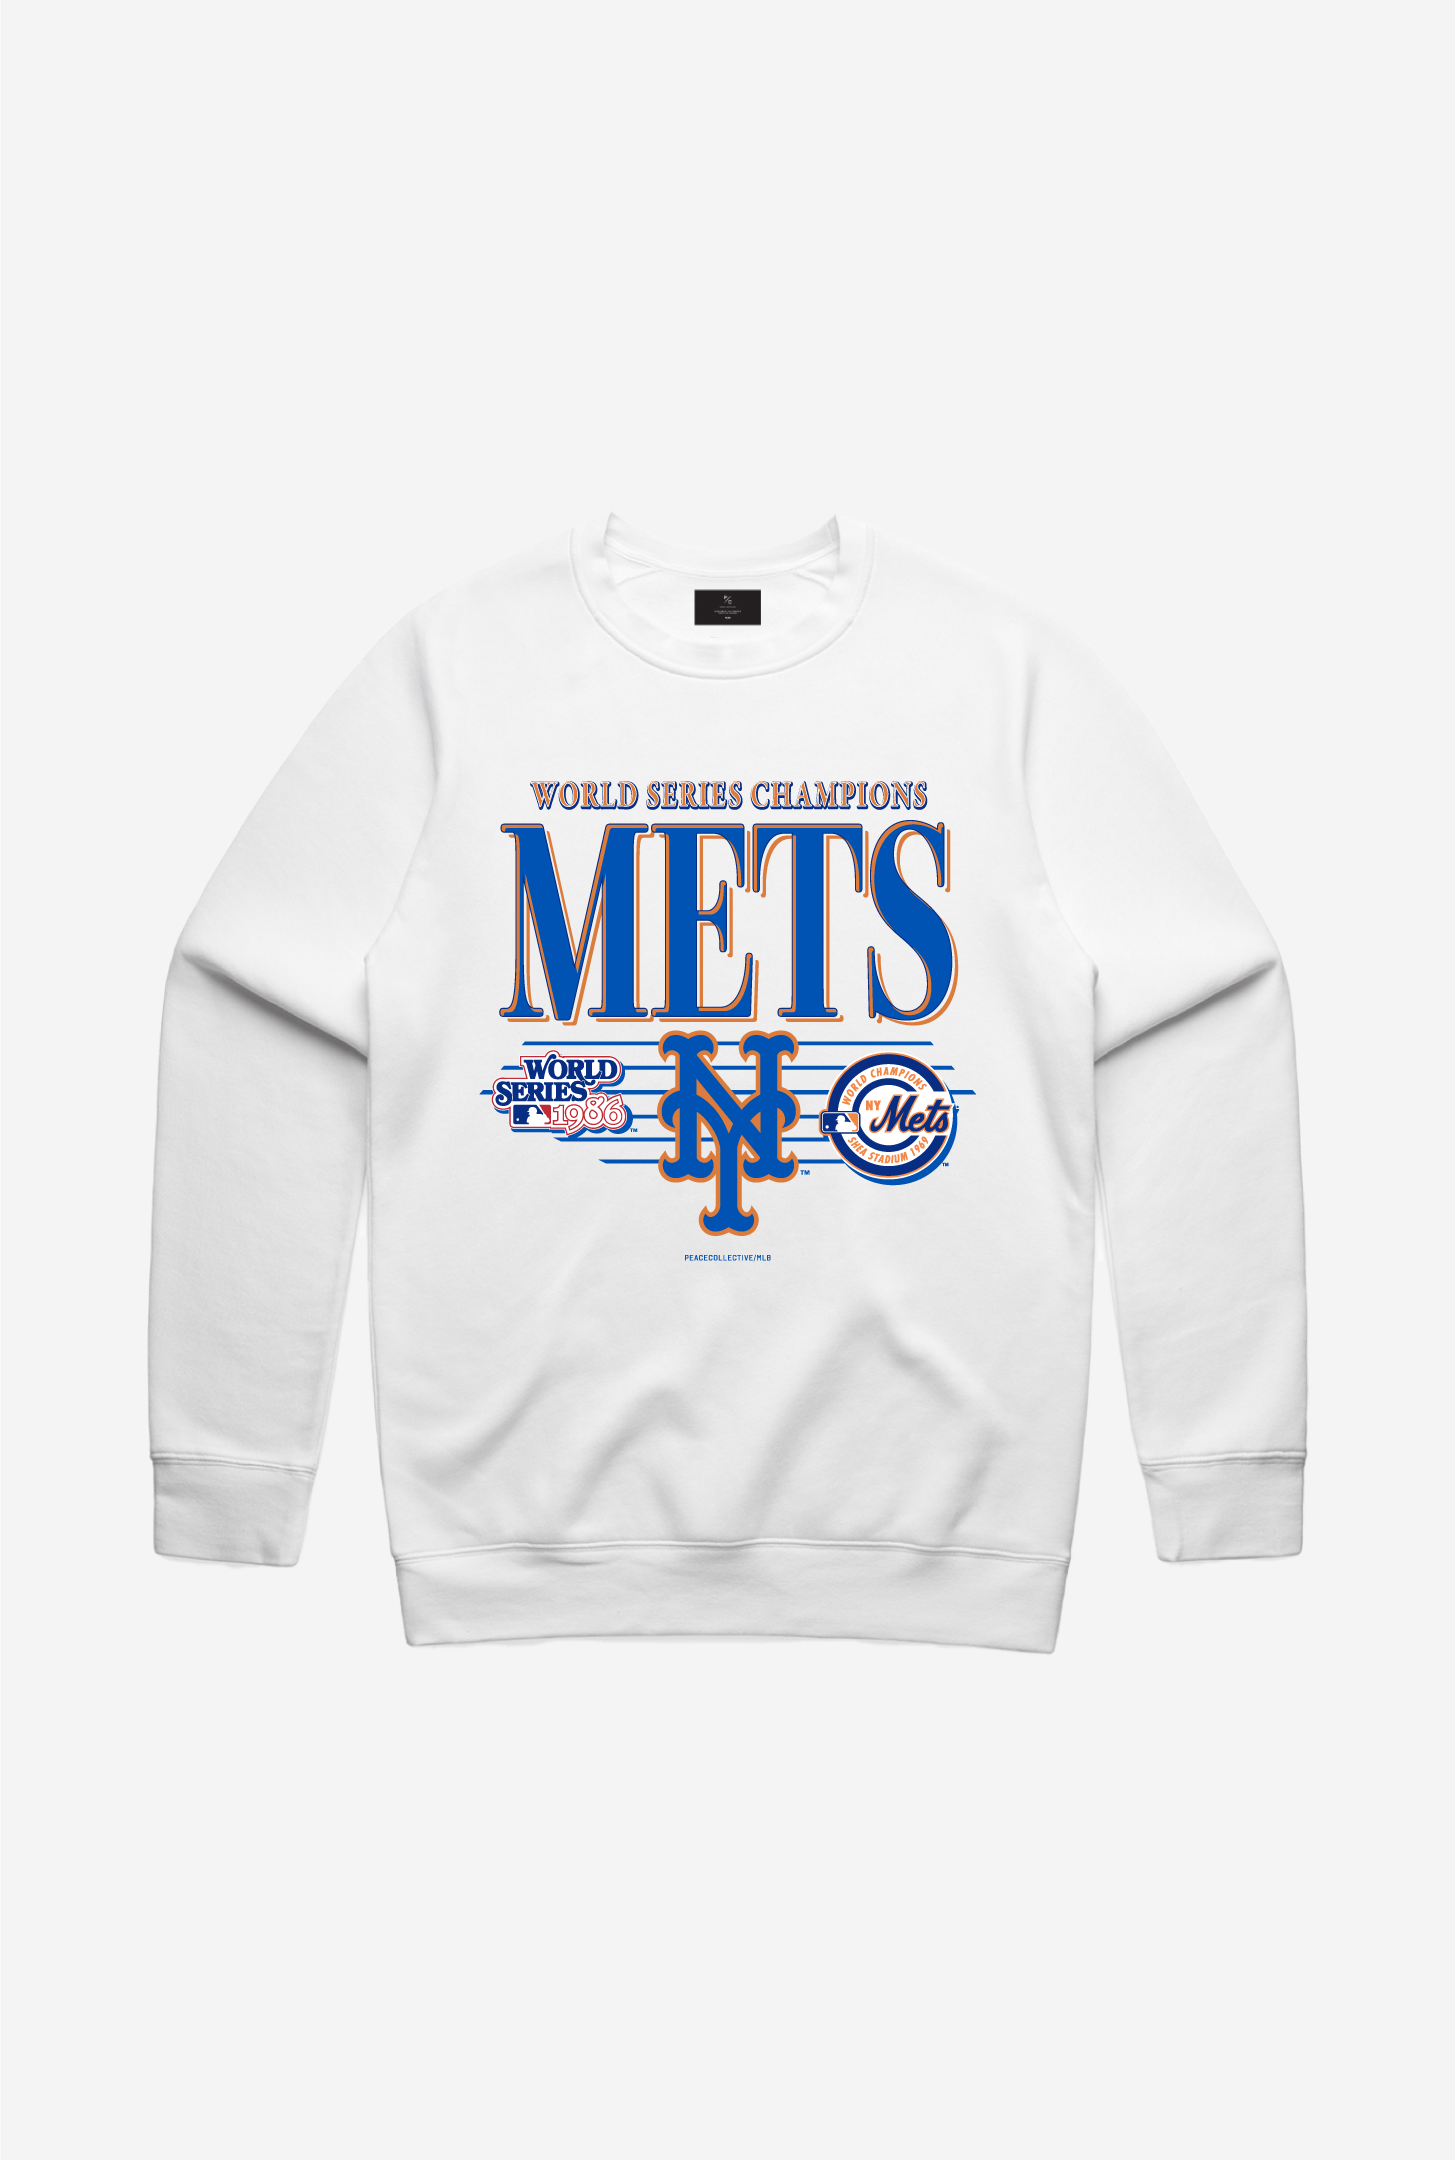 New York Mets Throwback Crewneck - White